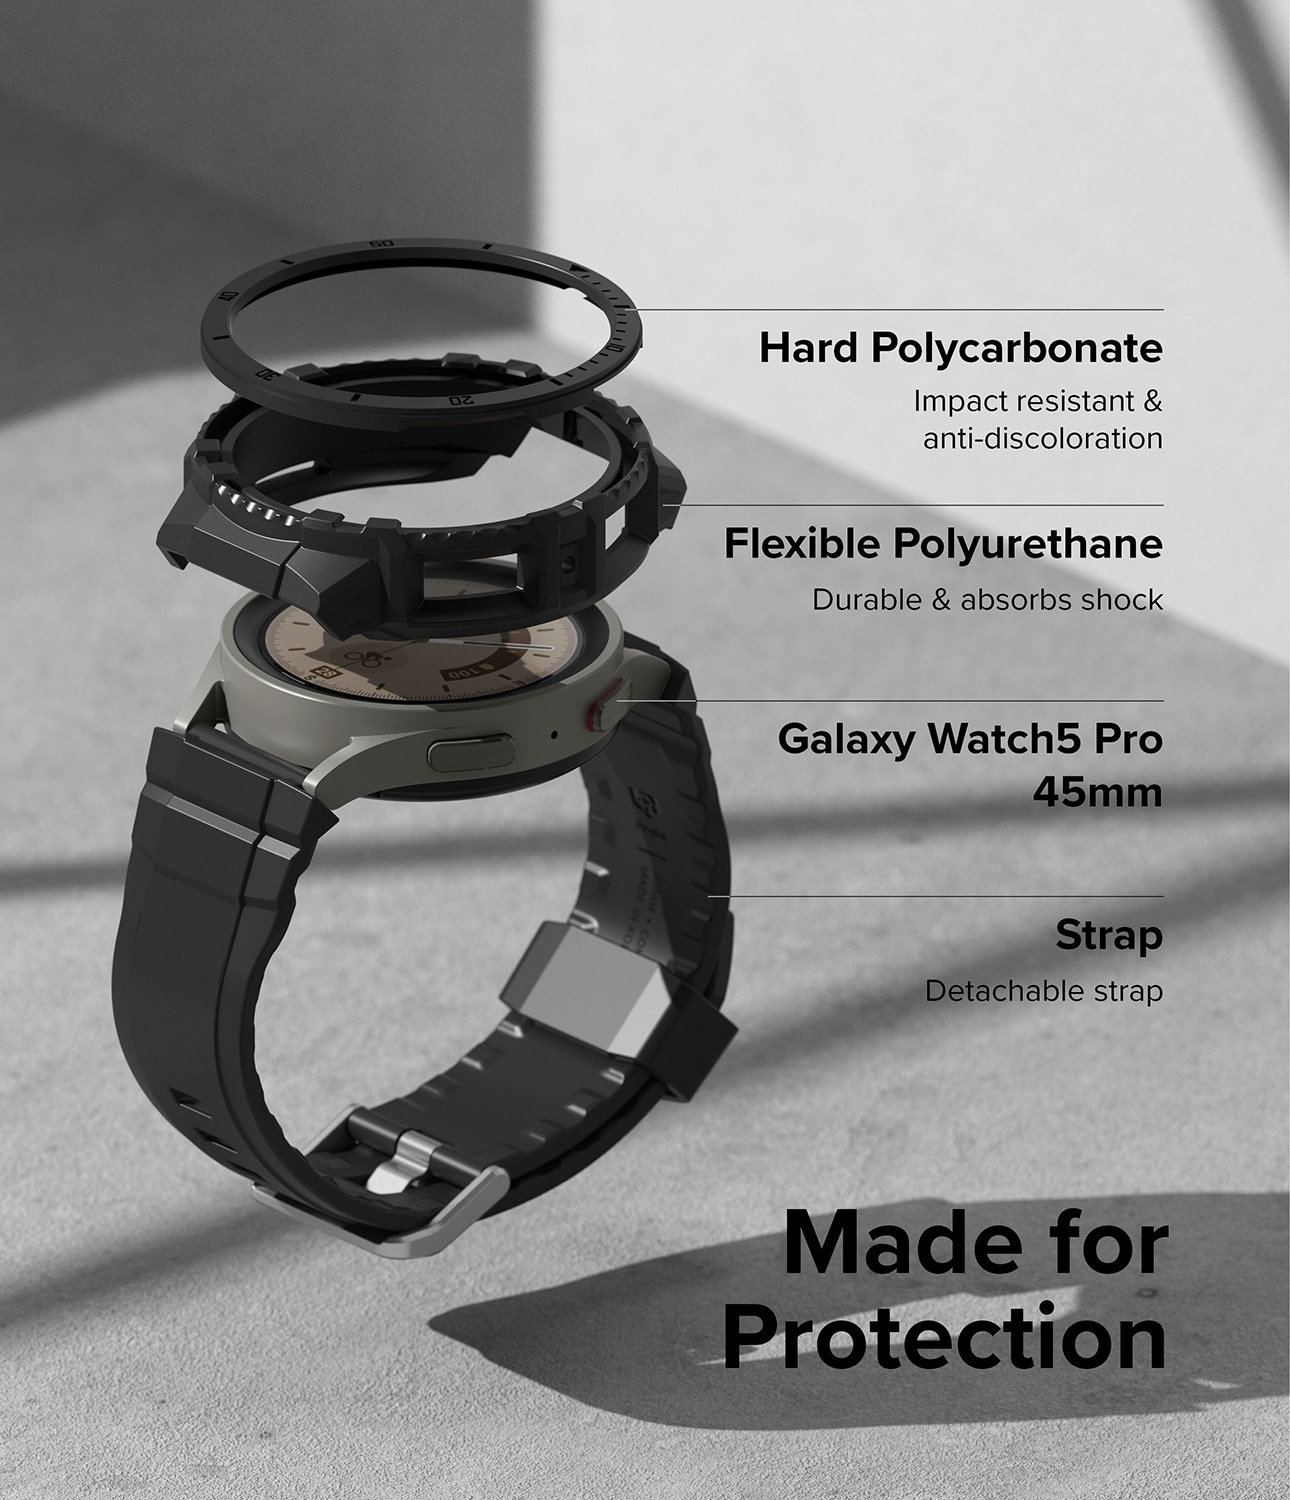 Fusion-X Guard Case+Band Samsung Galaxy Watch 5 Pro, Black